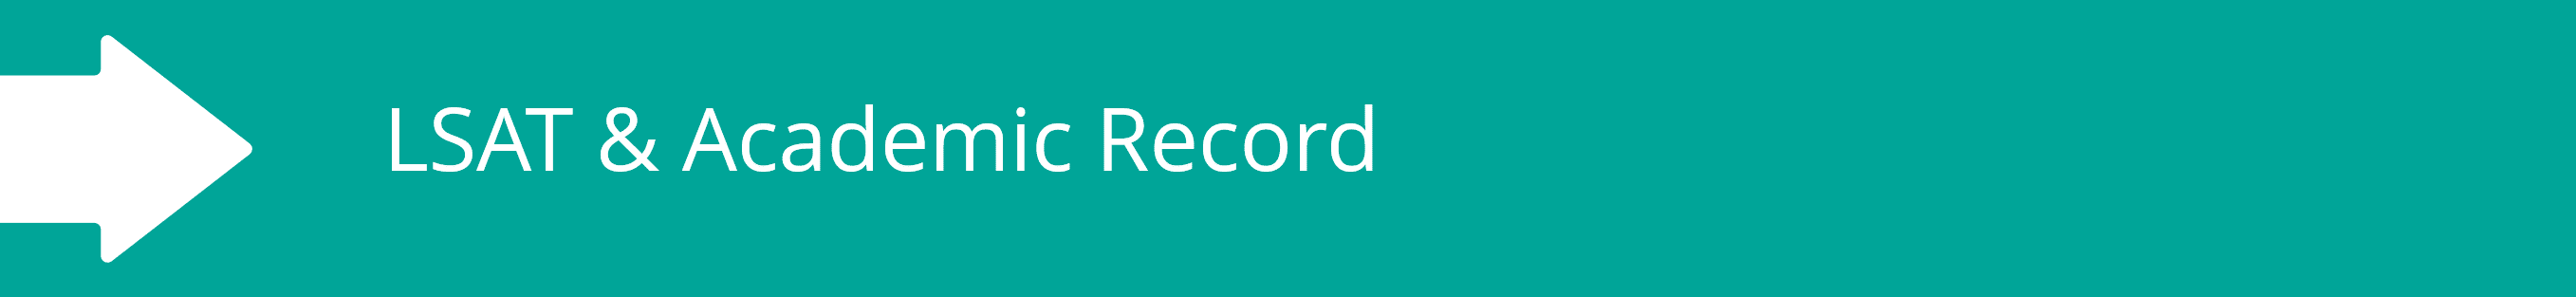 LSAT & Academic Record